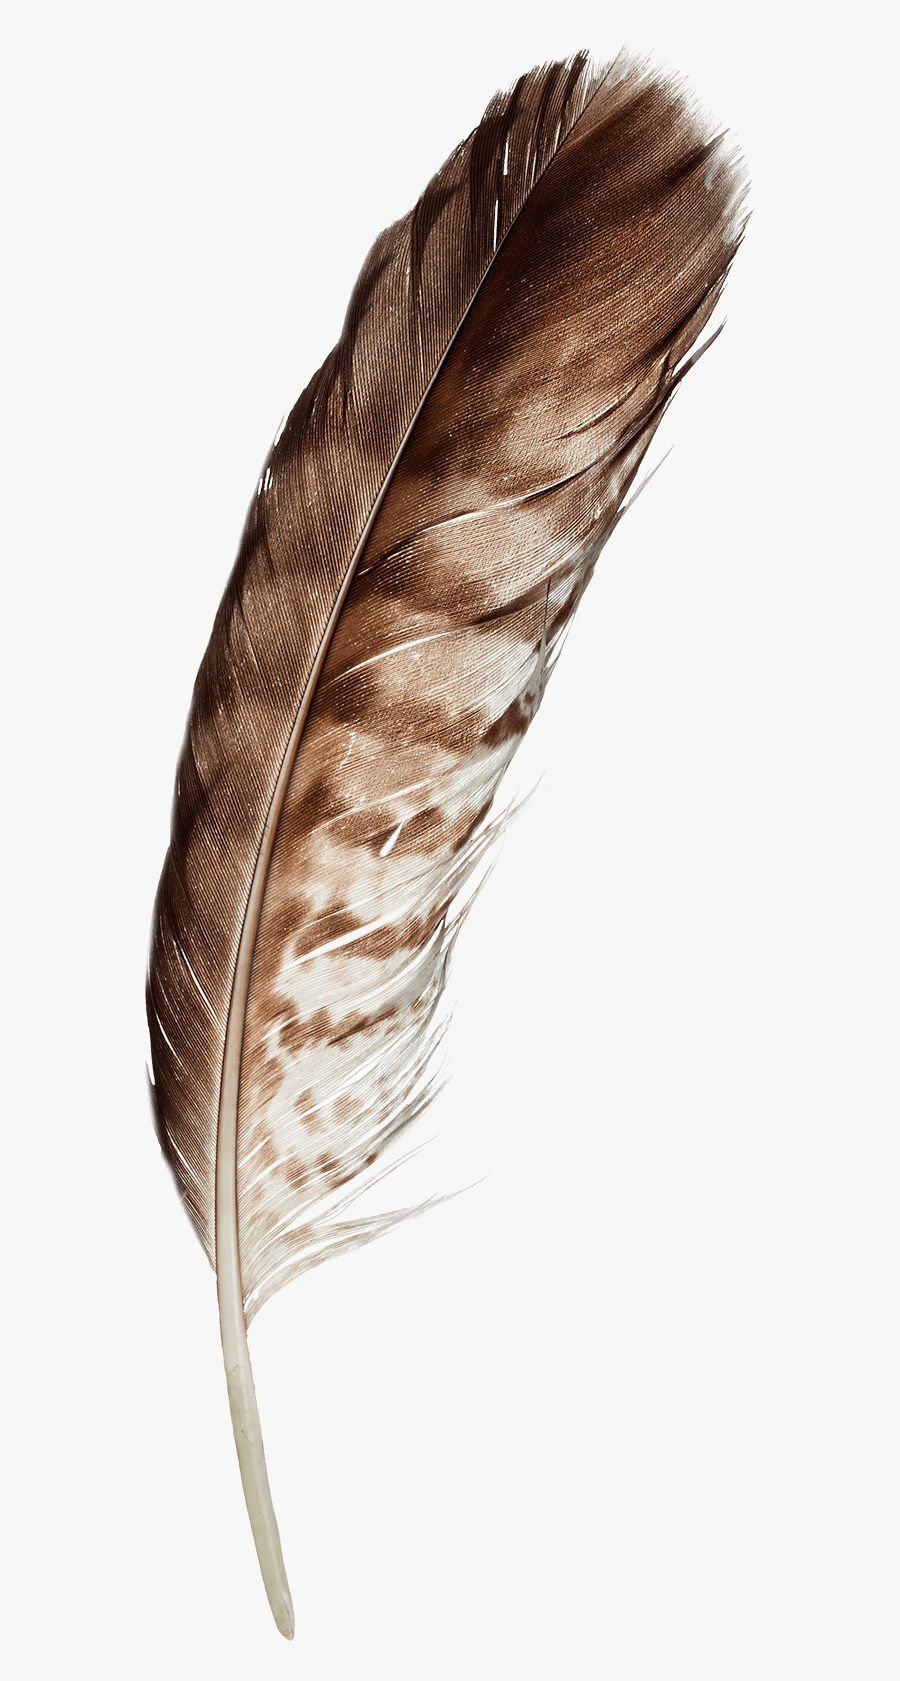 Feather - Bird Feather, Transparent Clipart